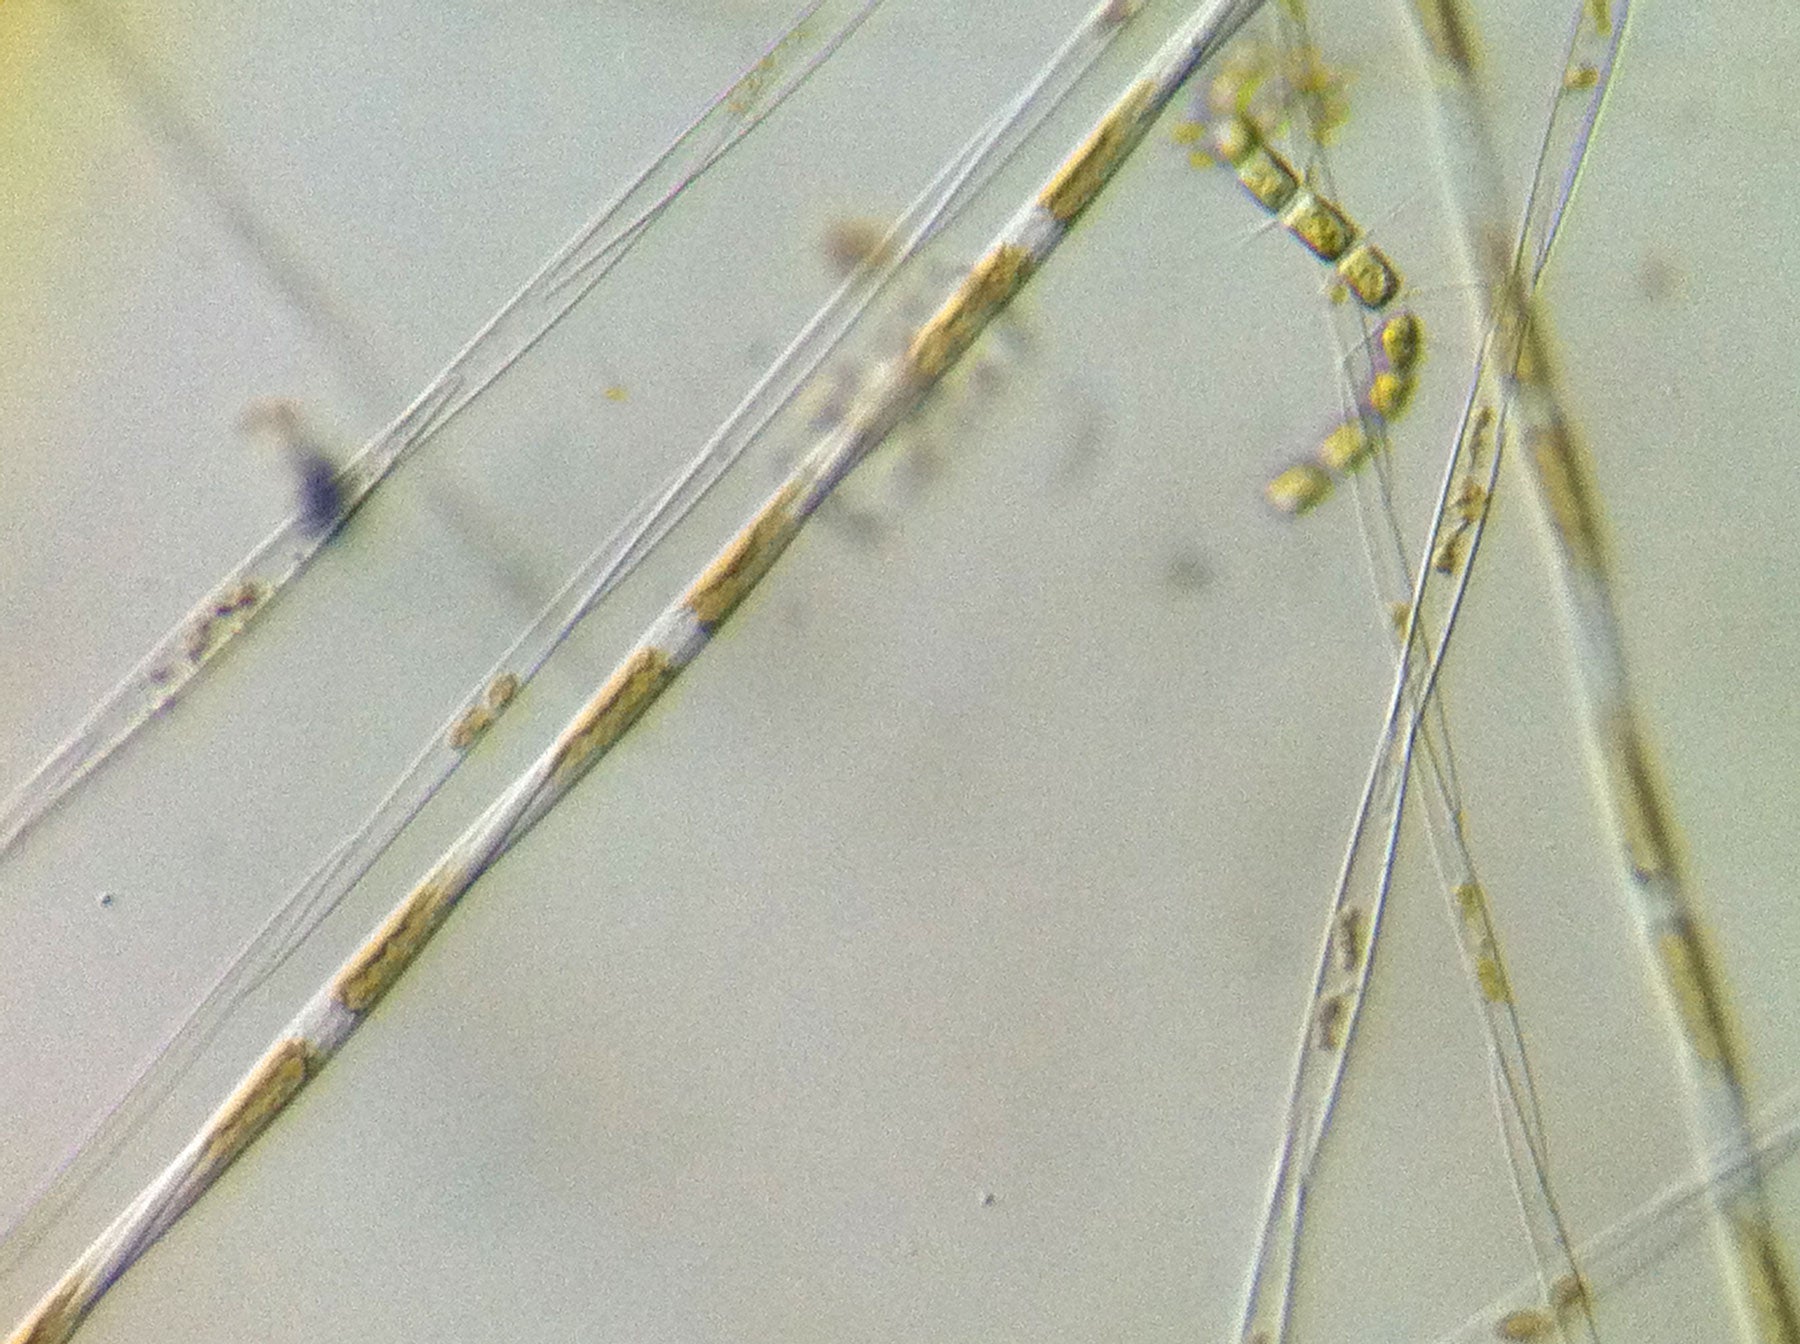 Pseudonitzschia toxic algae bloom